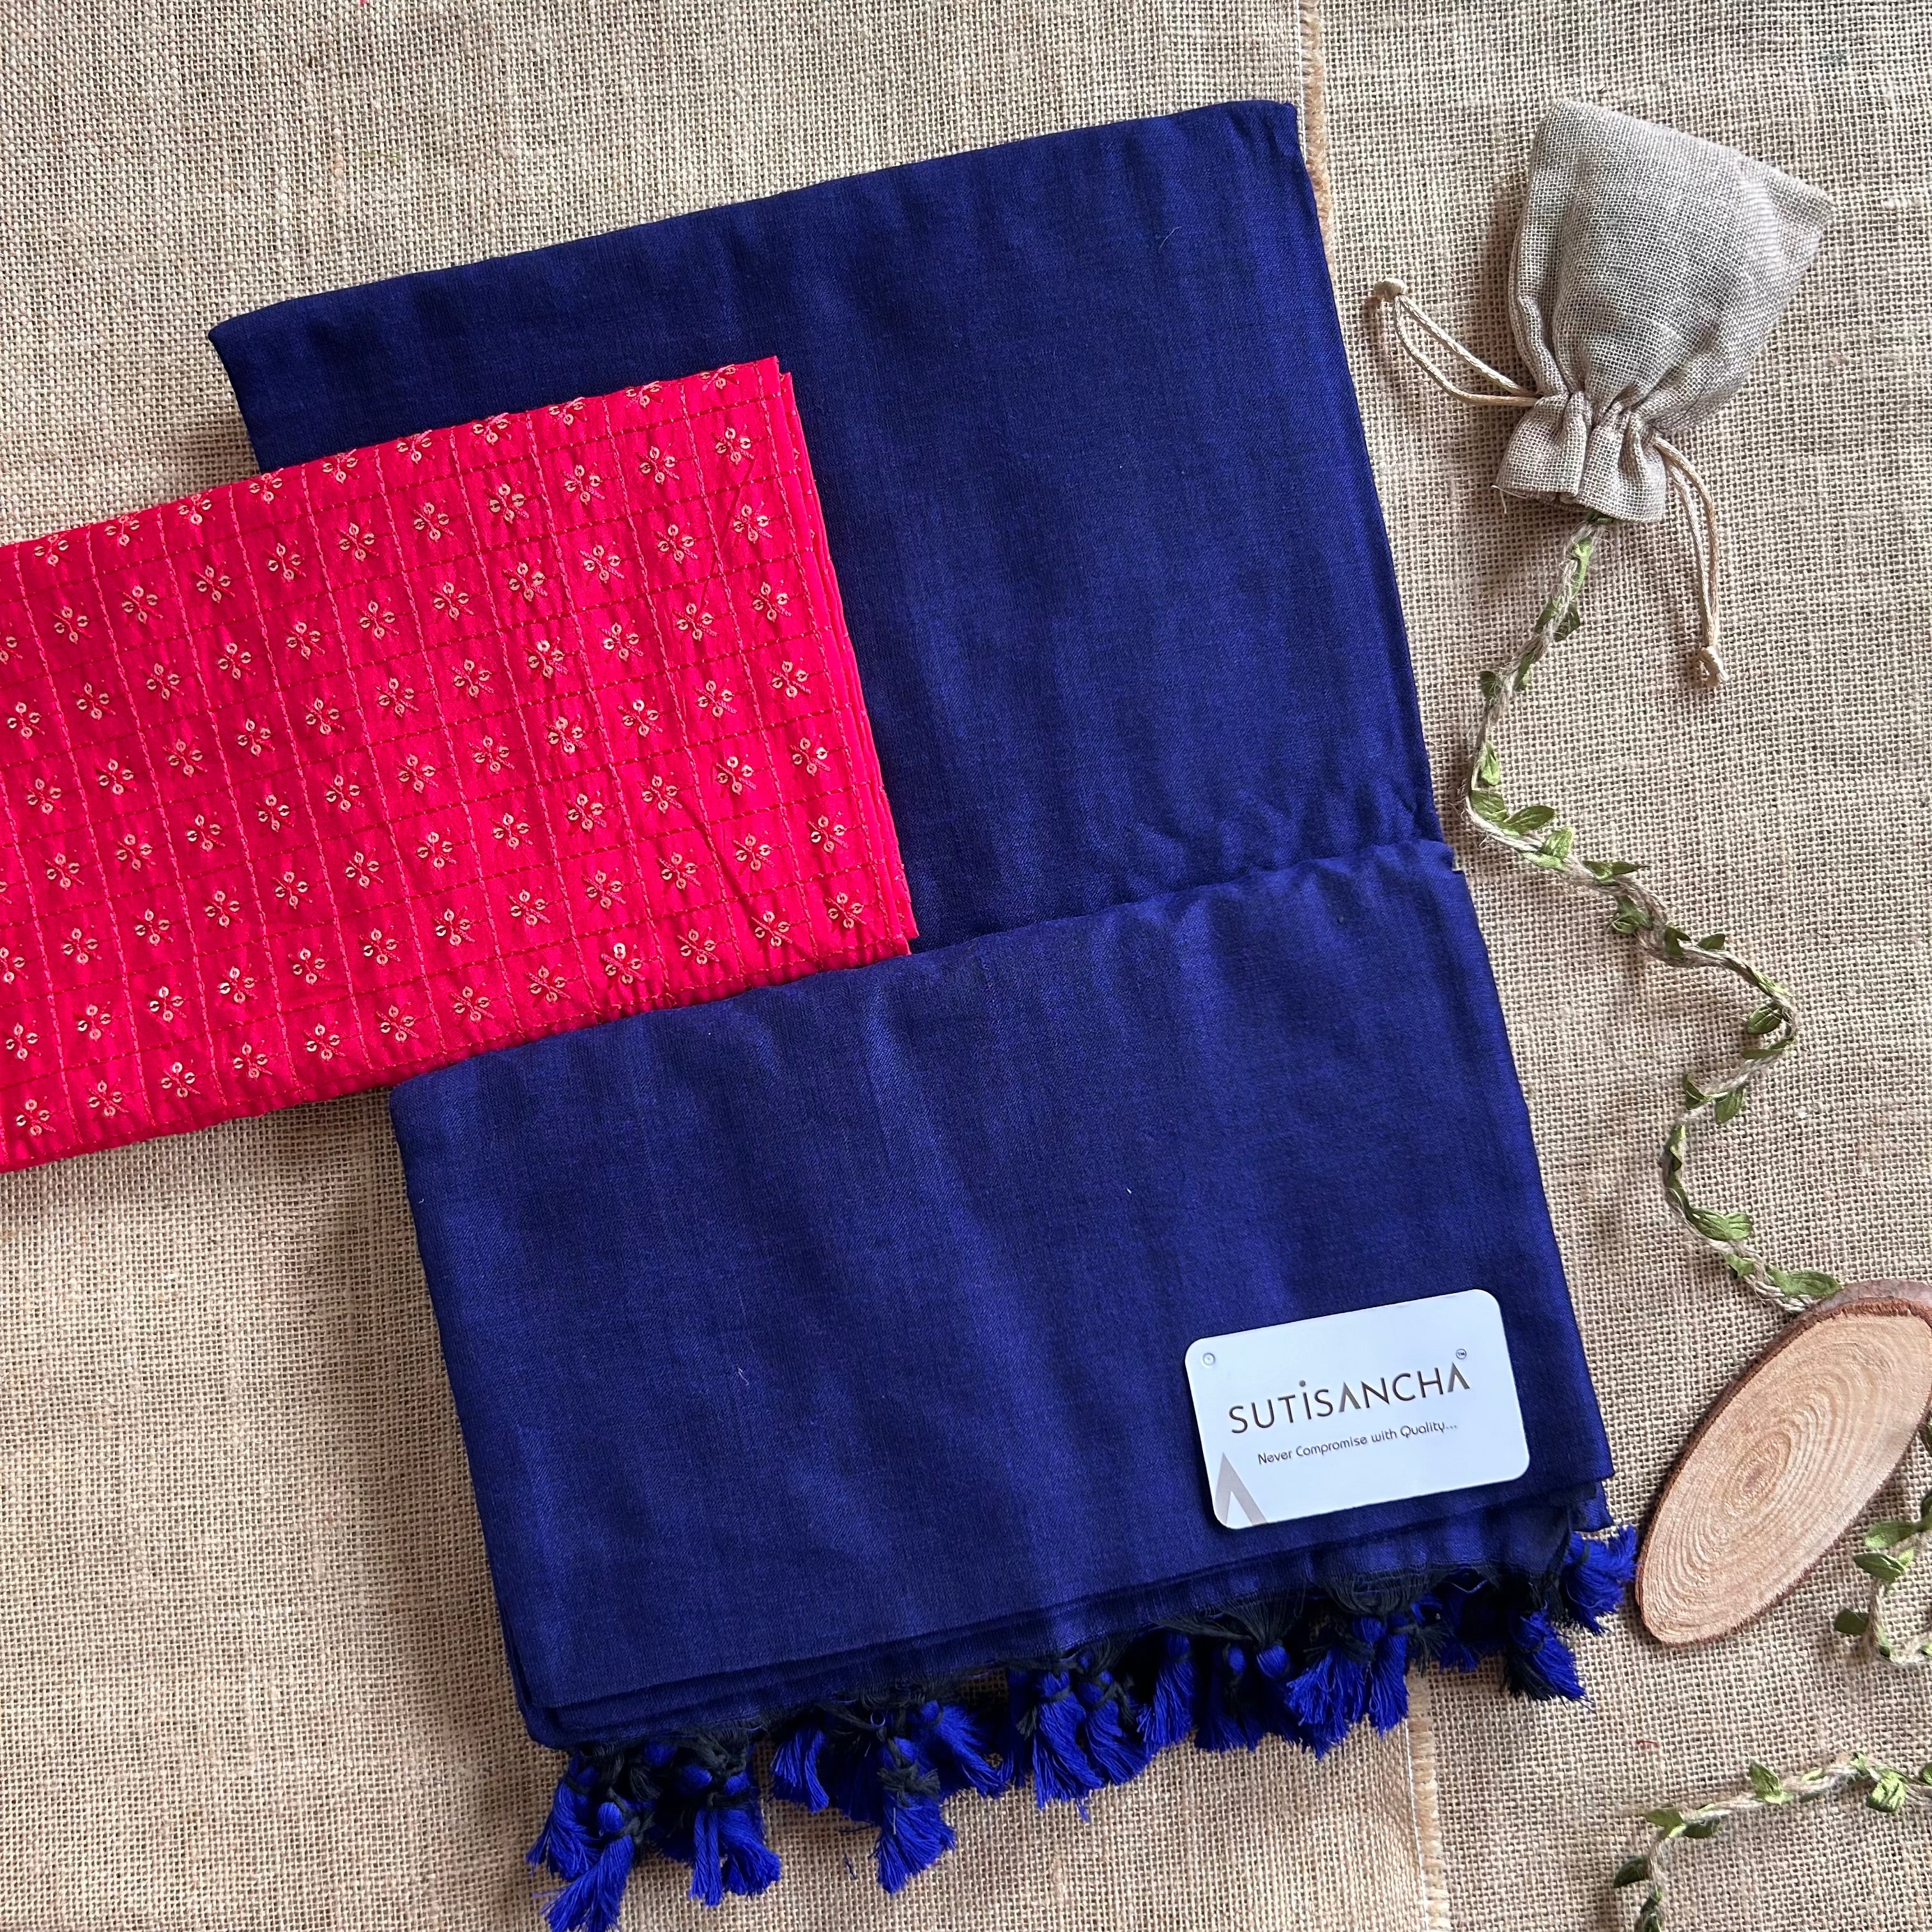 Sutisancha Royalblue Handloom Cotton Saree with Designer Blouse